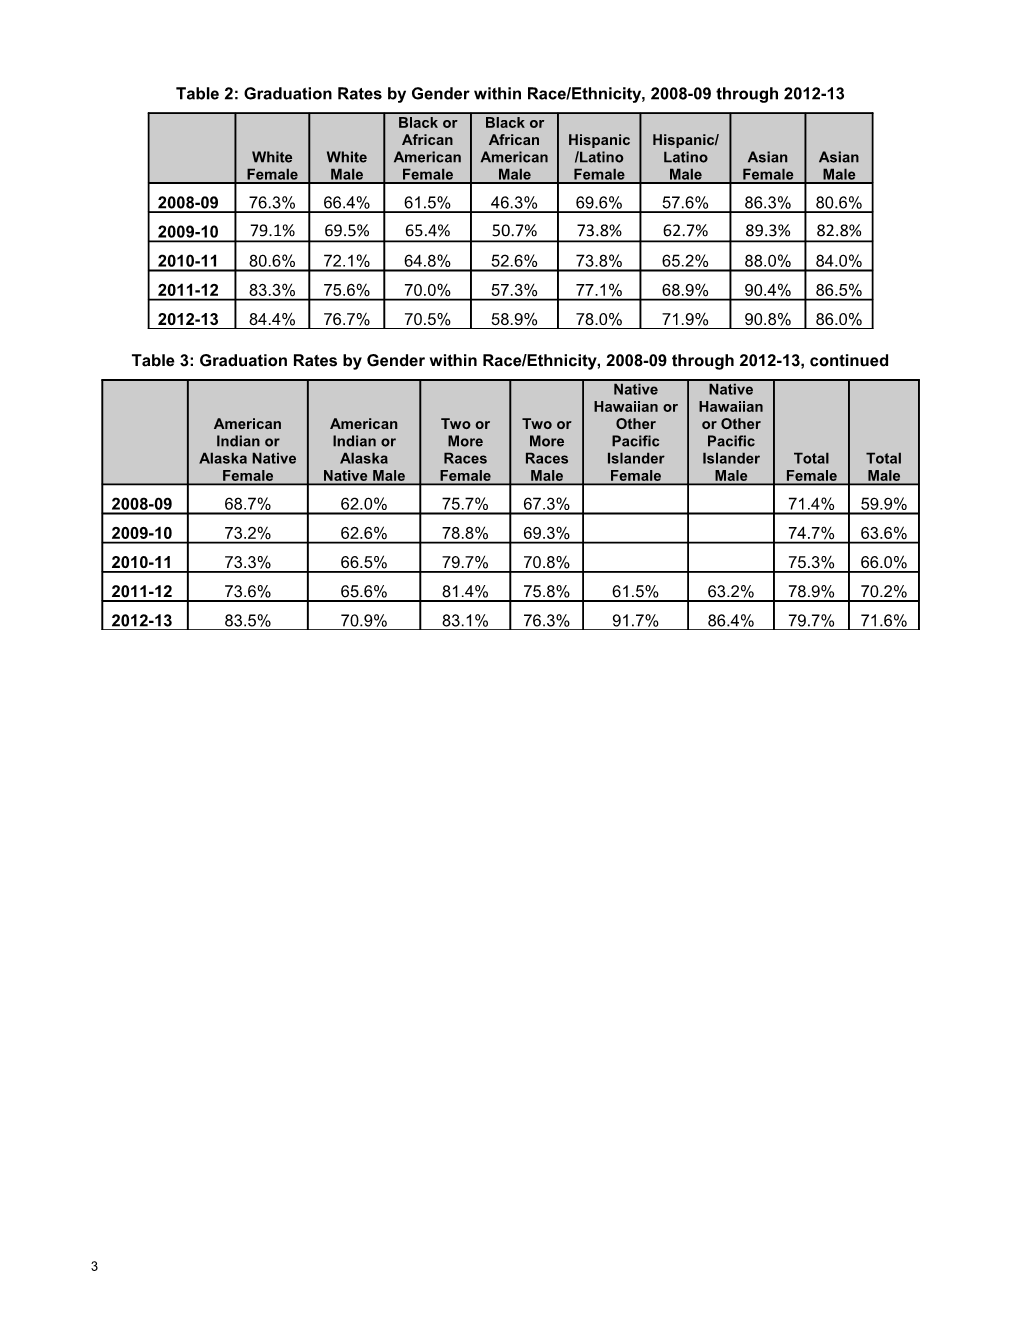 Florida High School Graduation Rates, 2012-13